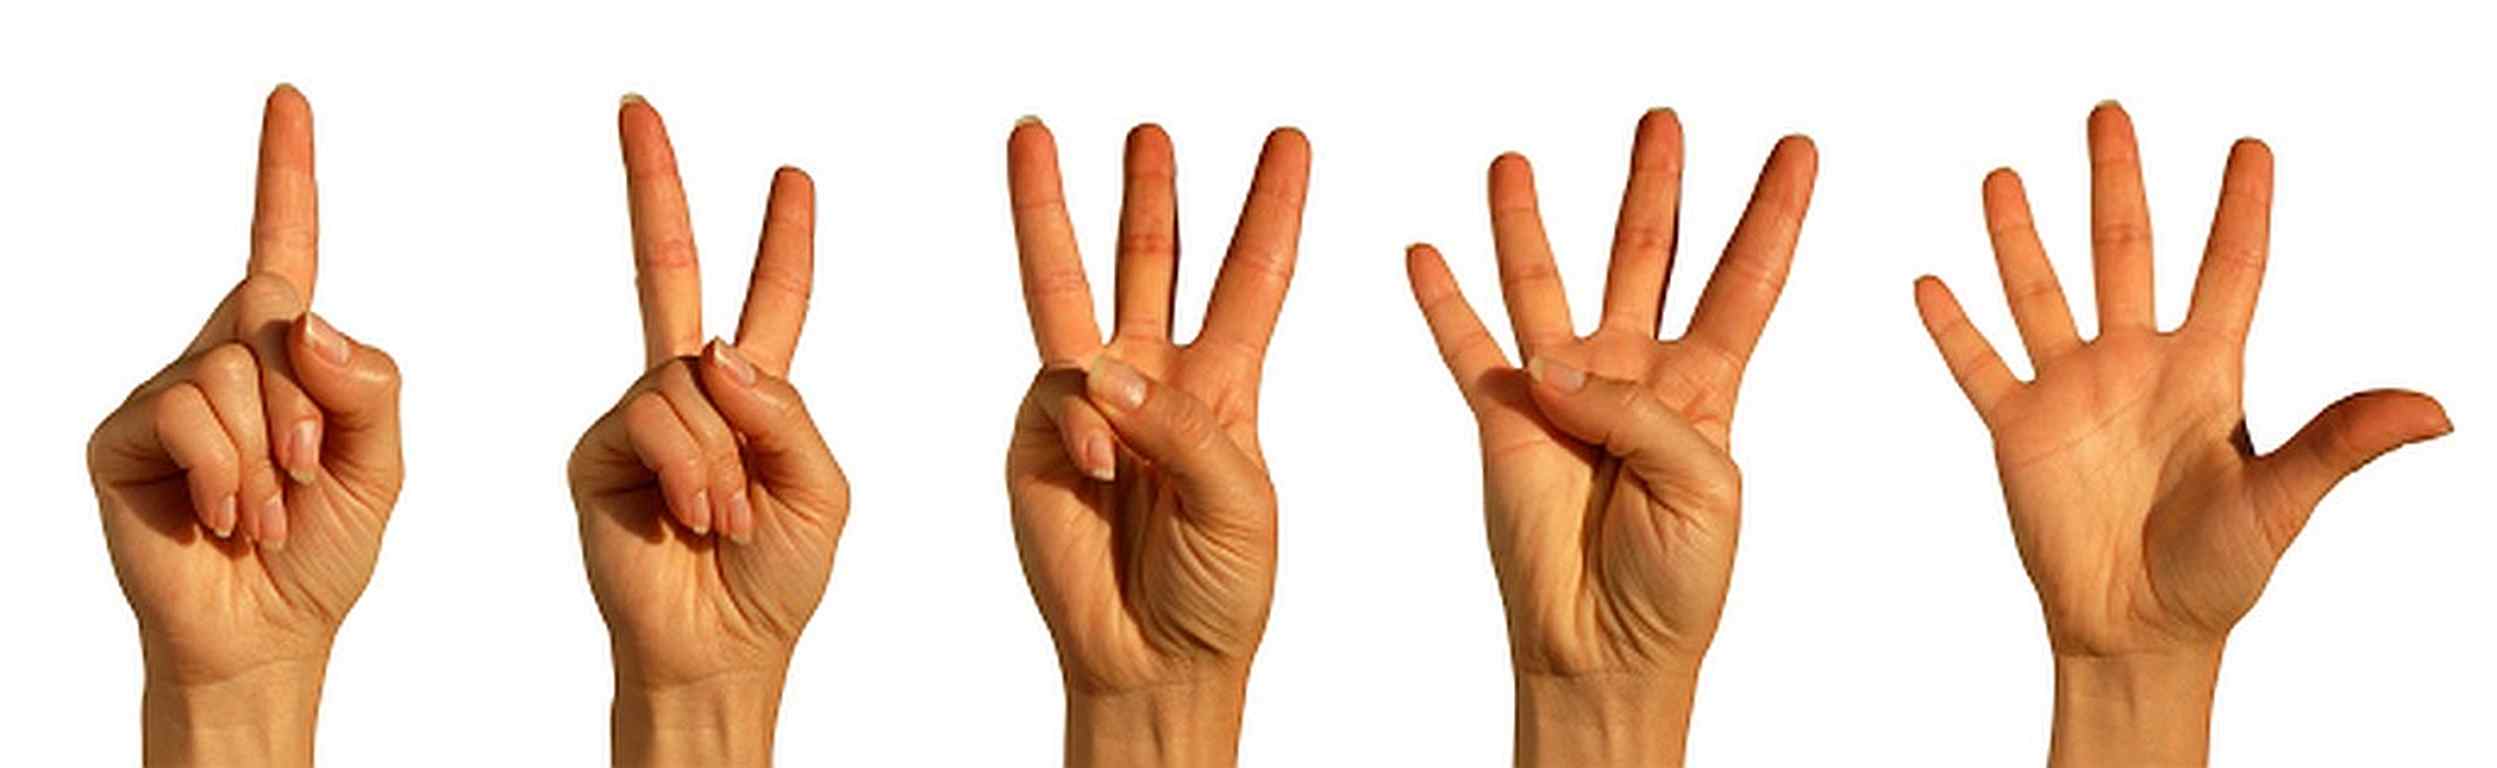 Five Fingers Scale for Agile Estimation